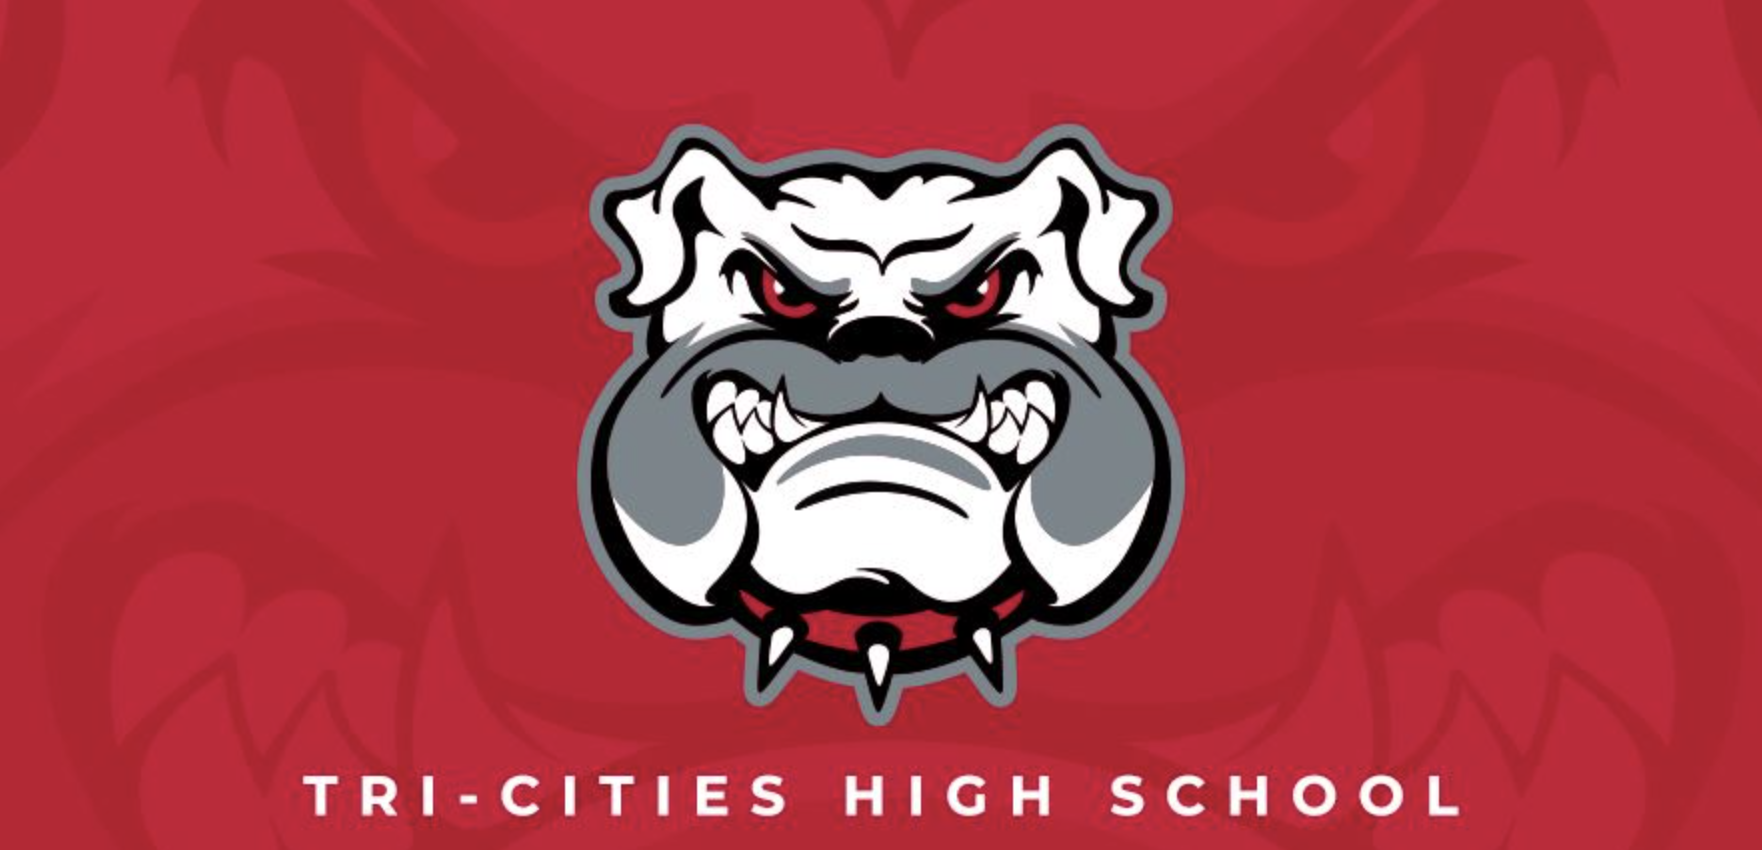 Tri-Cities High School